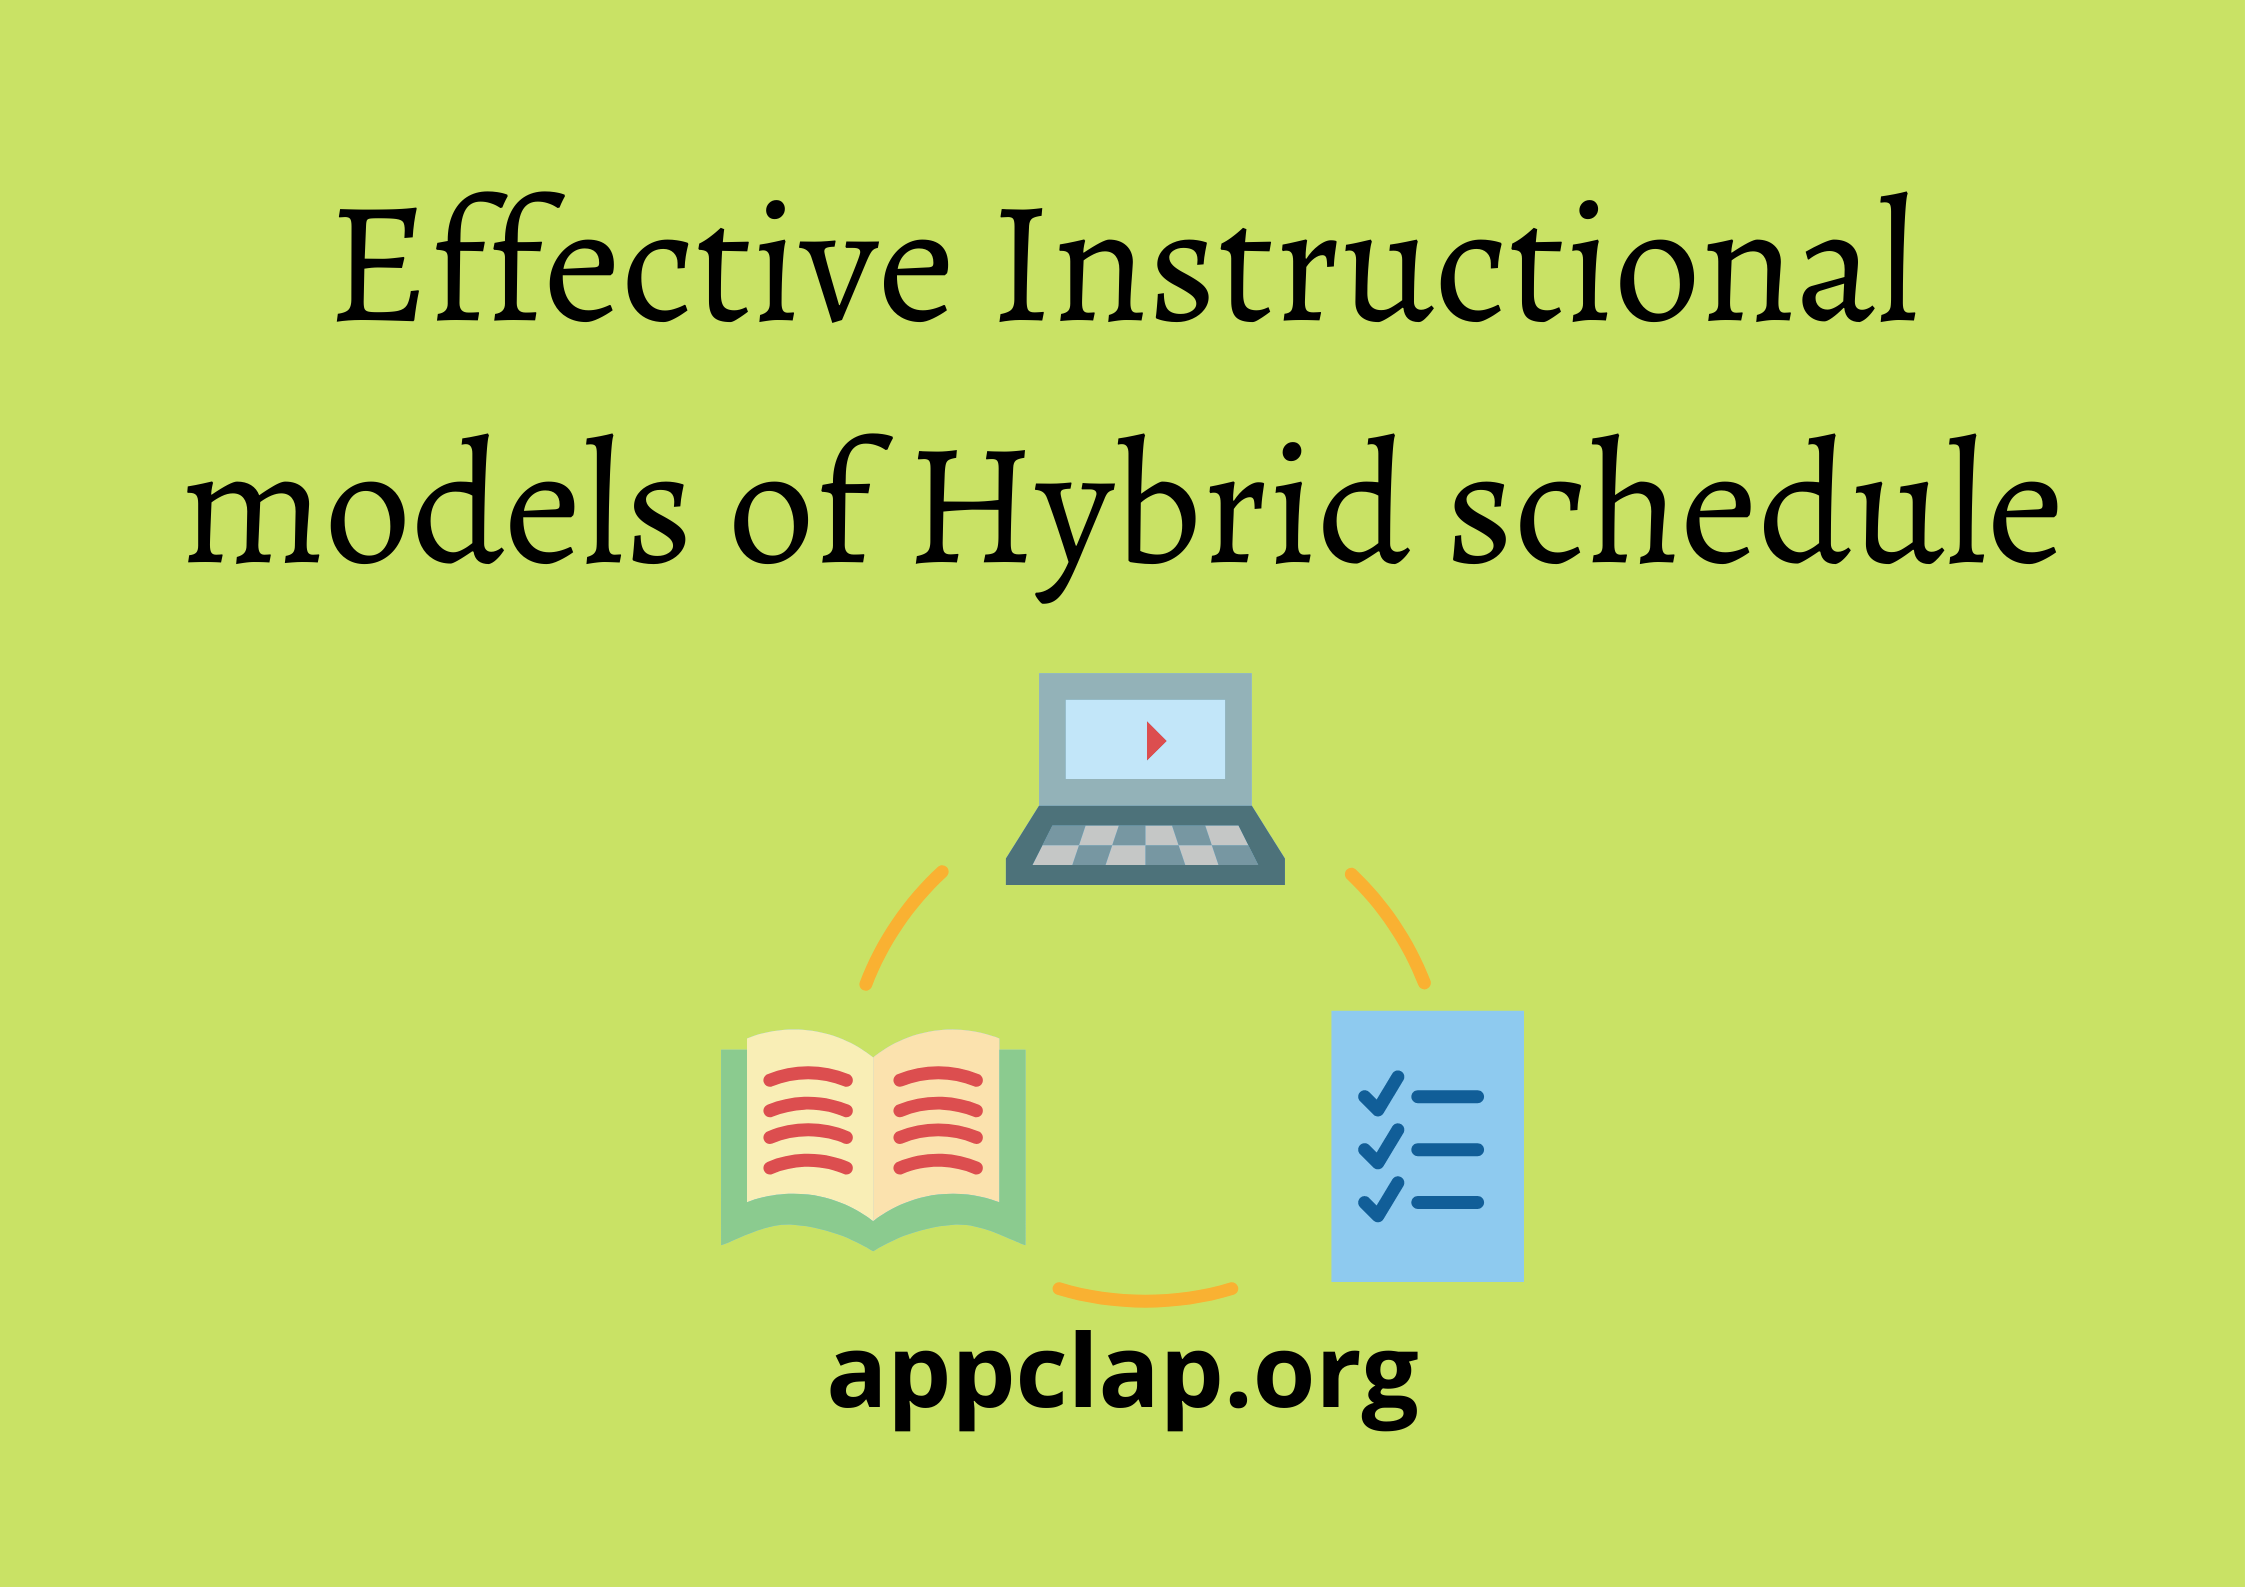 Effective Instructional models of Hybrid schedule